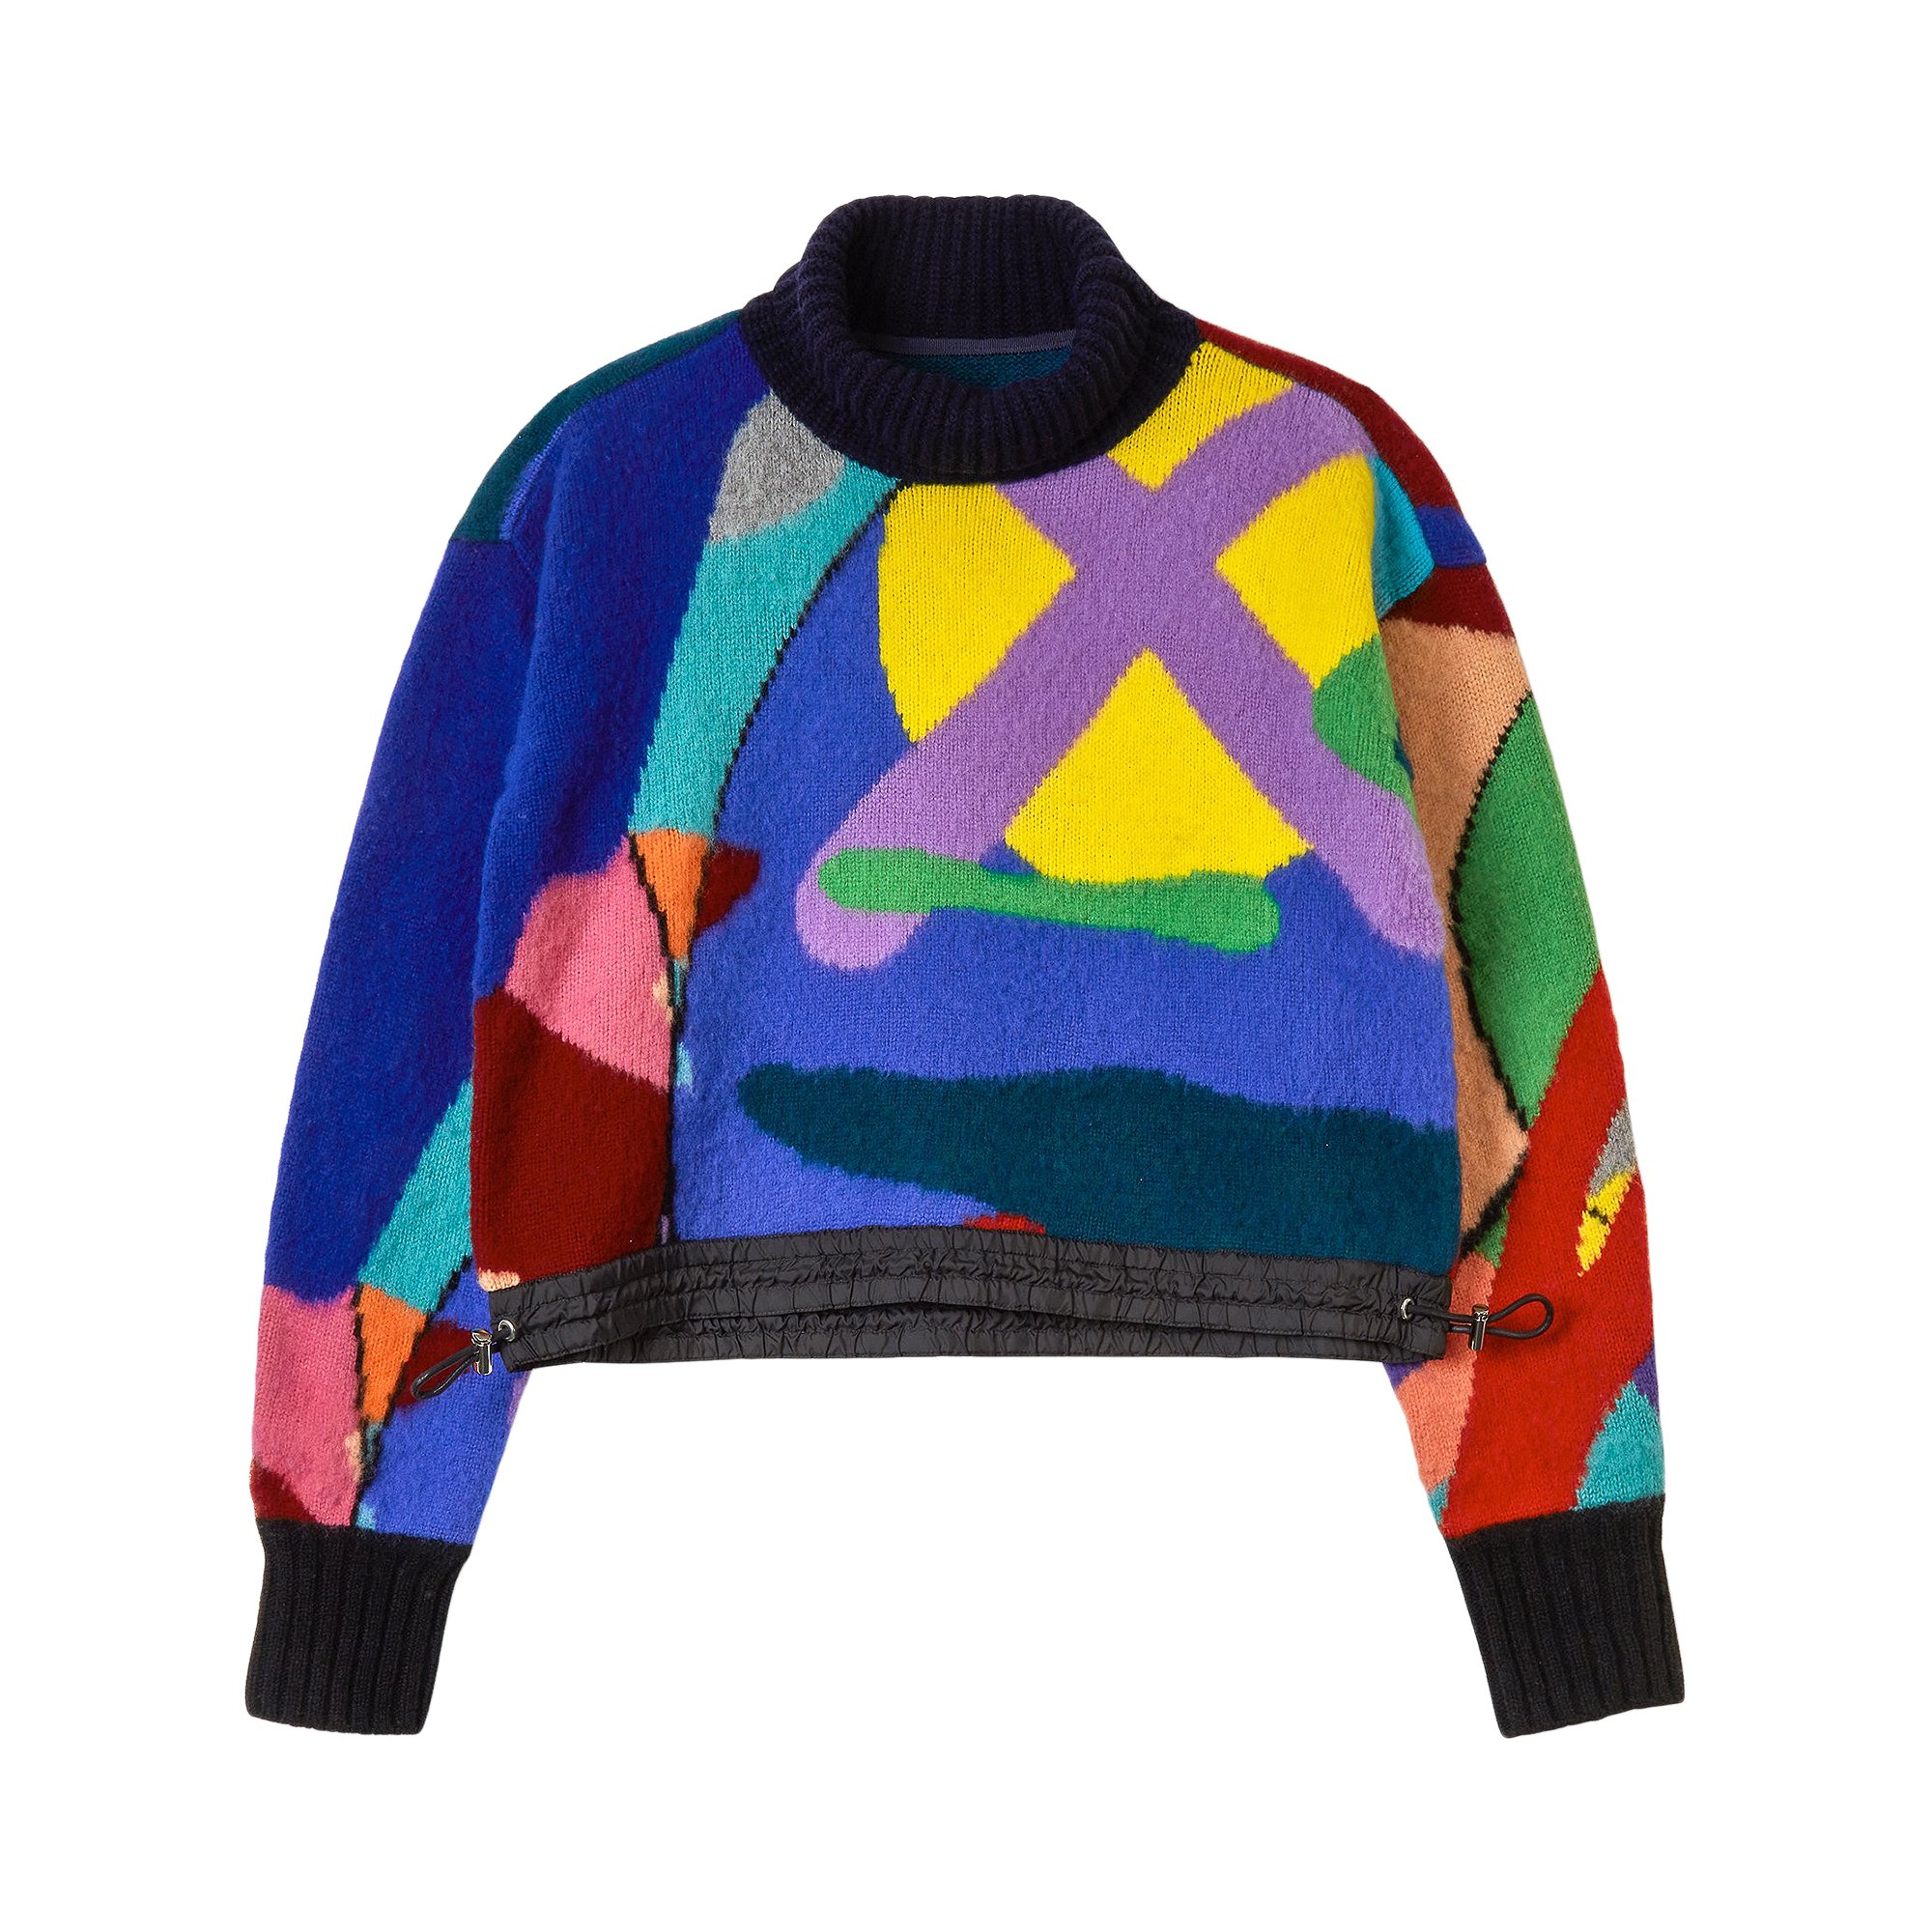 Sacai x KAWS Jacquard Knit Pullover 'Multicolor' | GOAT